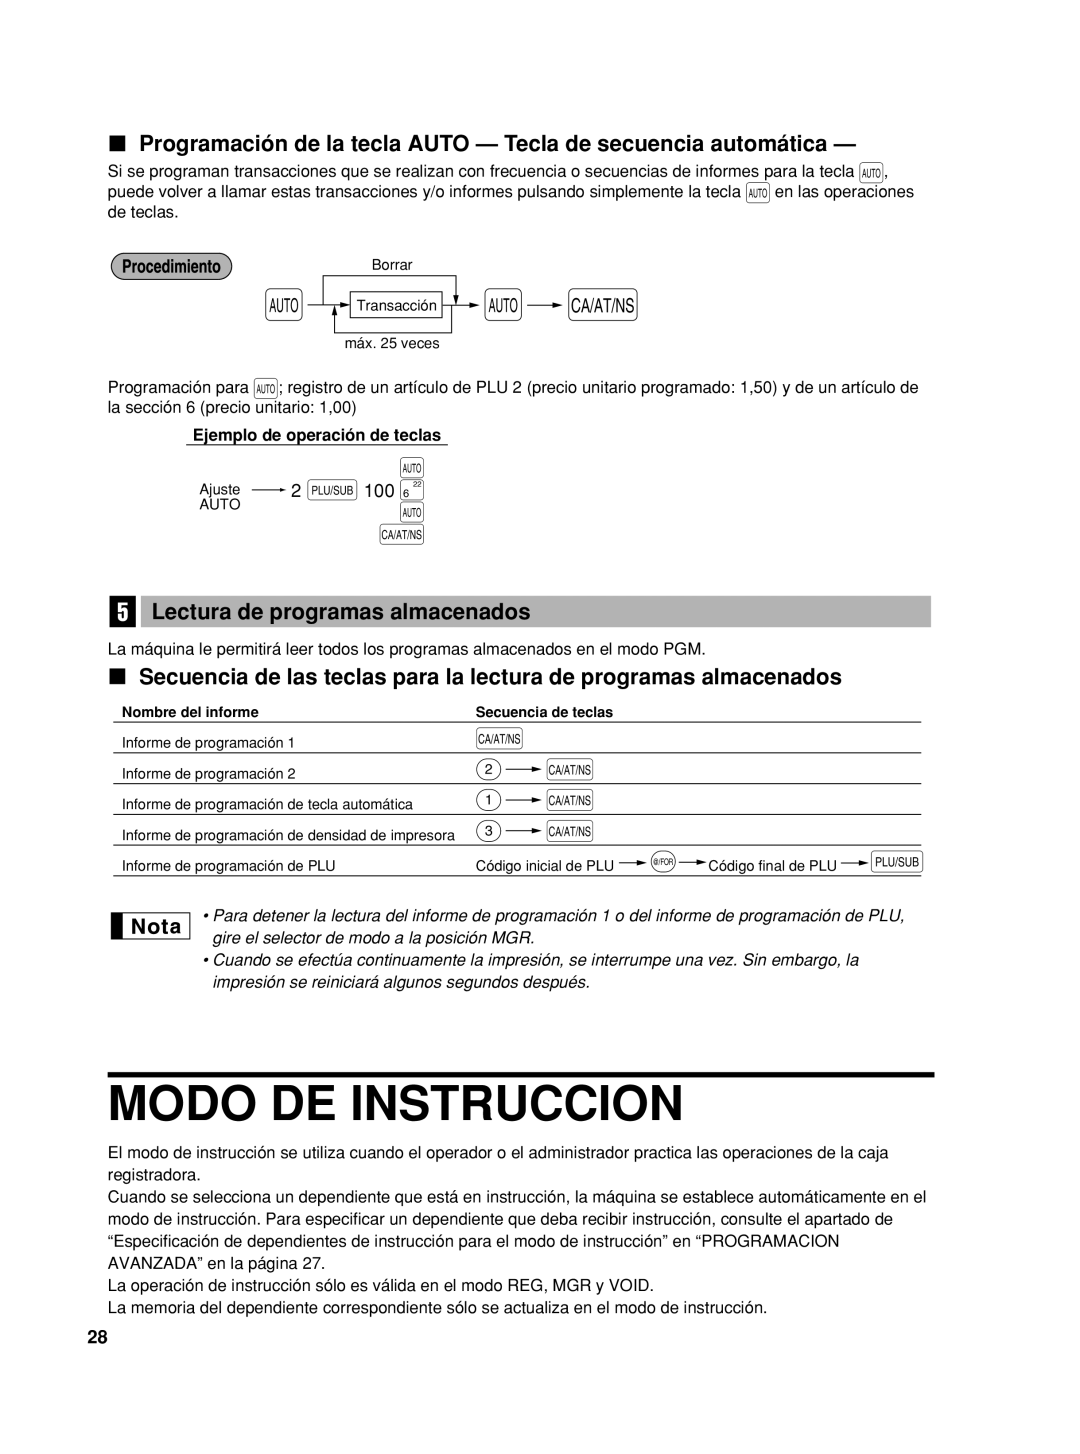 Sharp TINSZ2600RCZZ instruction manual Modo De Instruccion, Programación de la tecla AUTO - Tecla de secuencia automática 